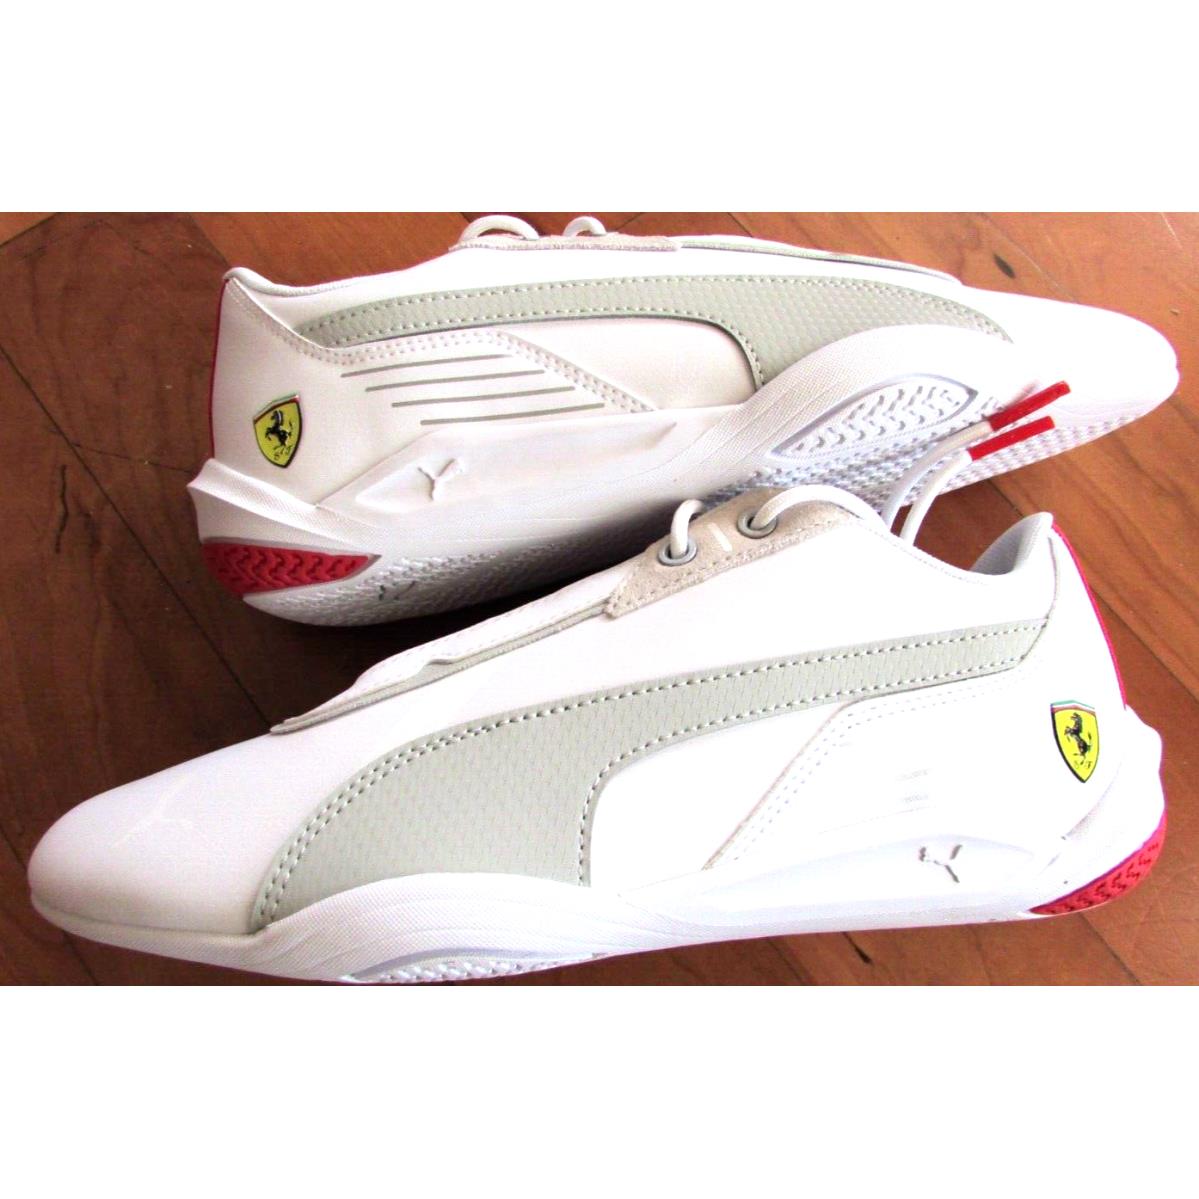 Terzijde Nauwkeurig Inzichtelijk Ferrari Driving Shoes by Puma R Cat White Size 7.5 Mens US UK 6.5 Eur 25.5  | 031341160016 - Puma shoes Motorsport driving shoes - White | SporTipTop